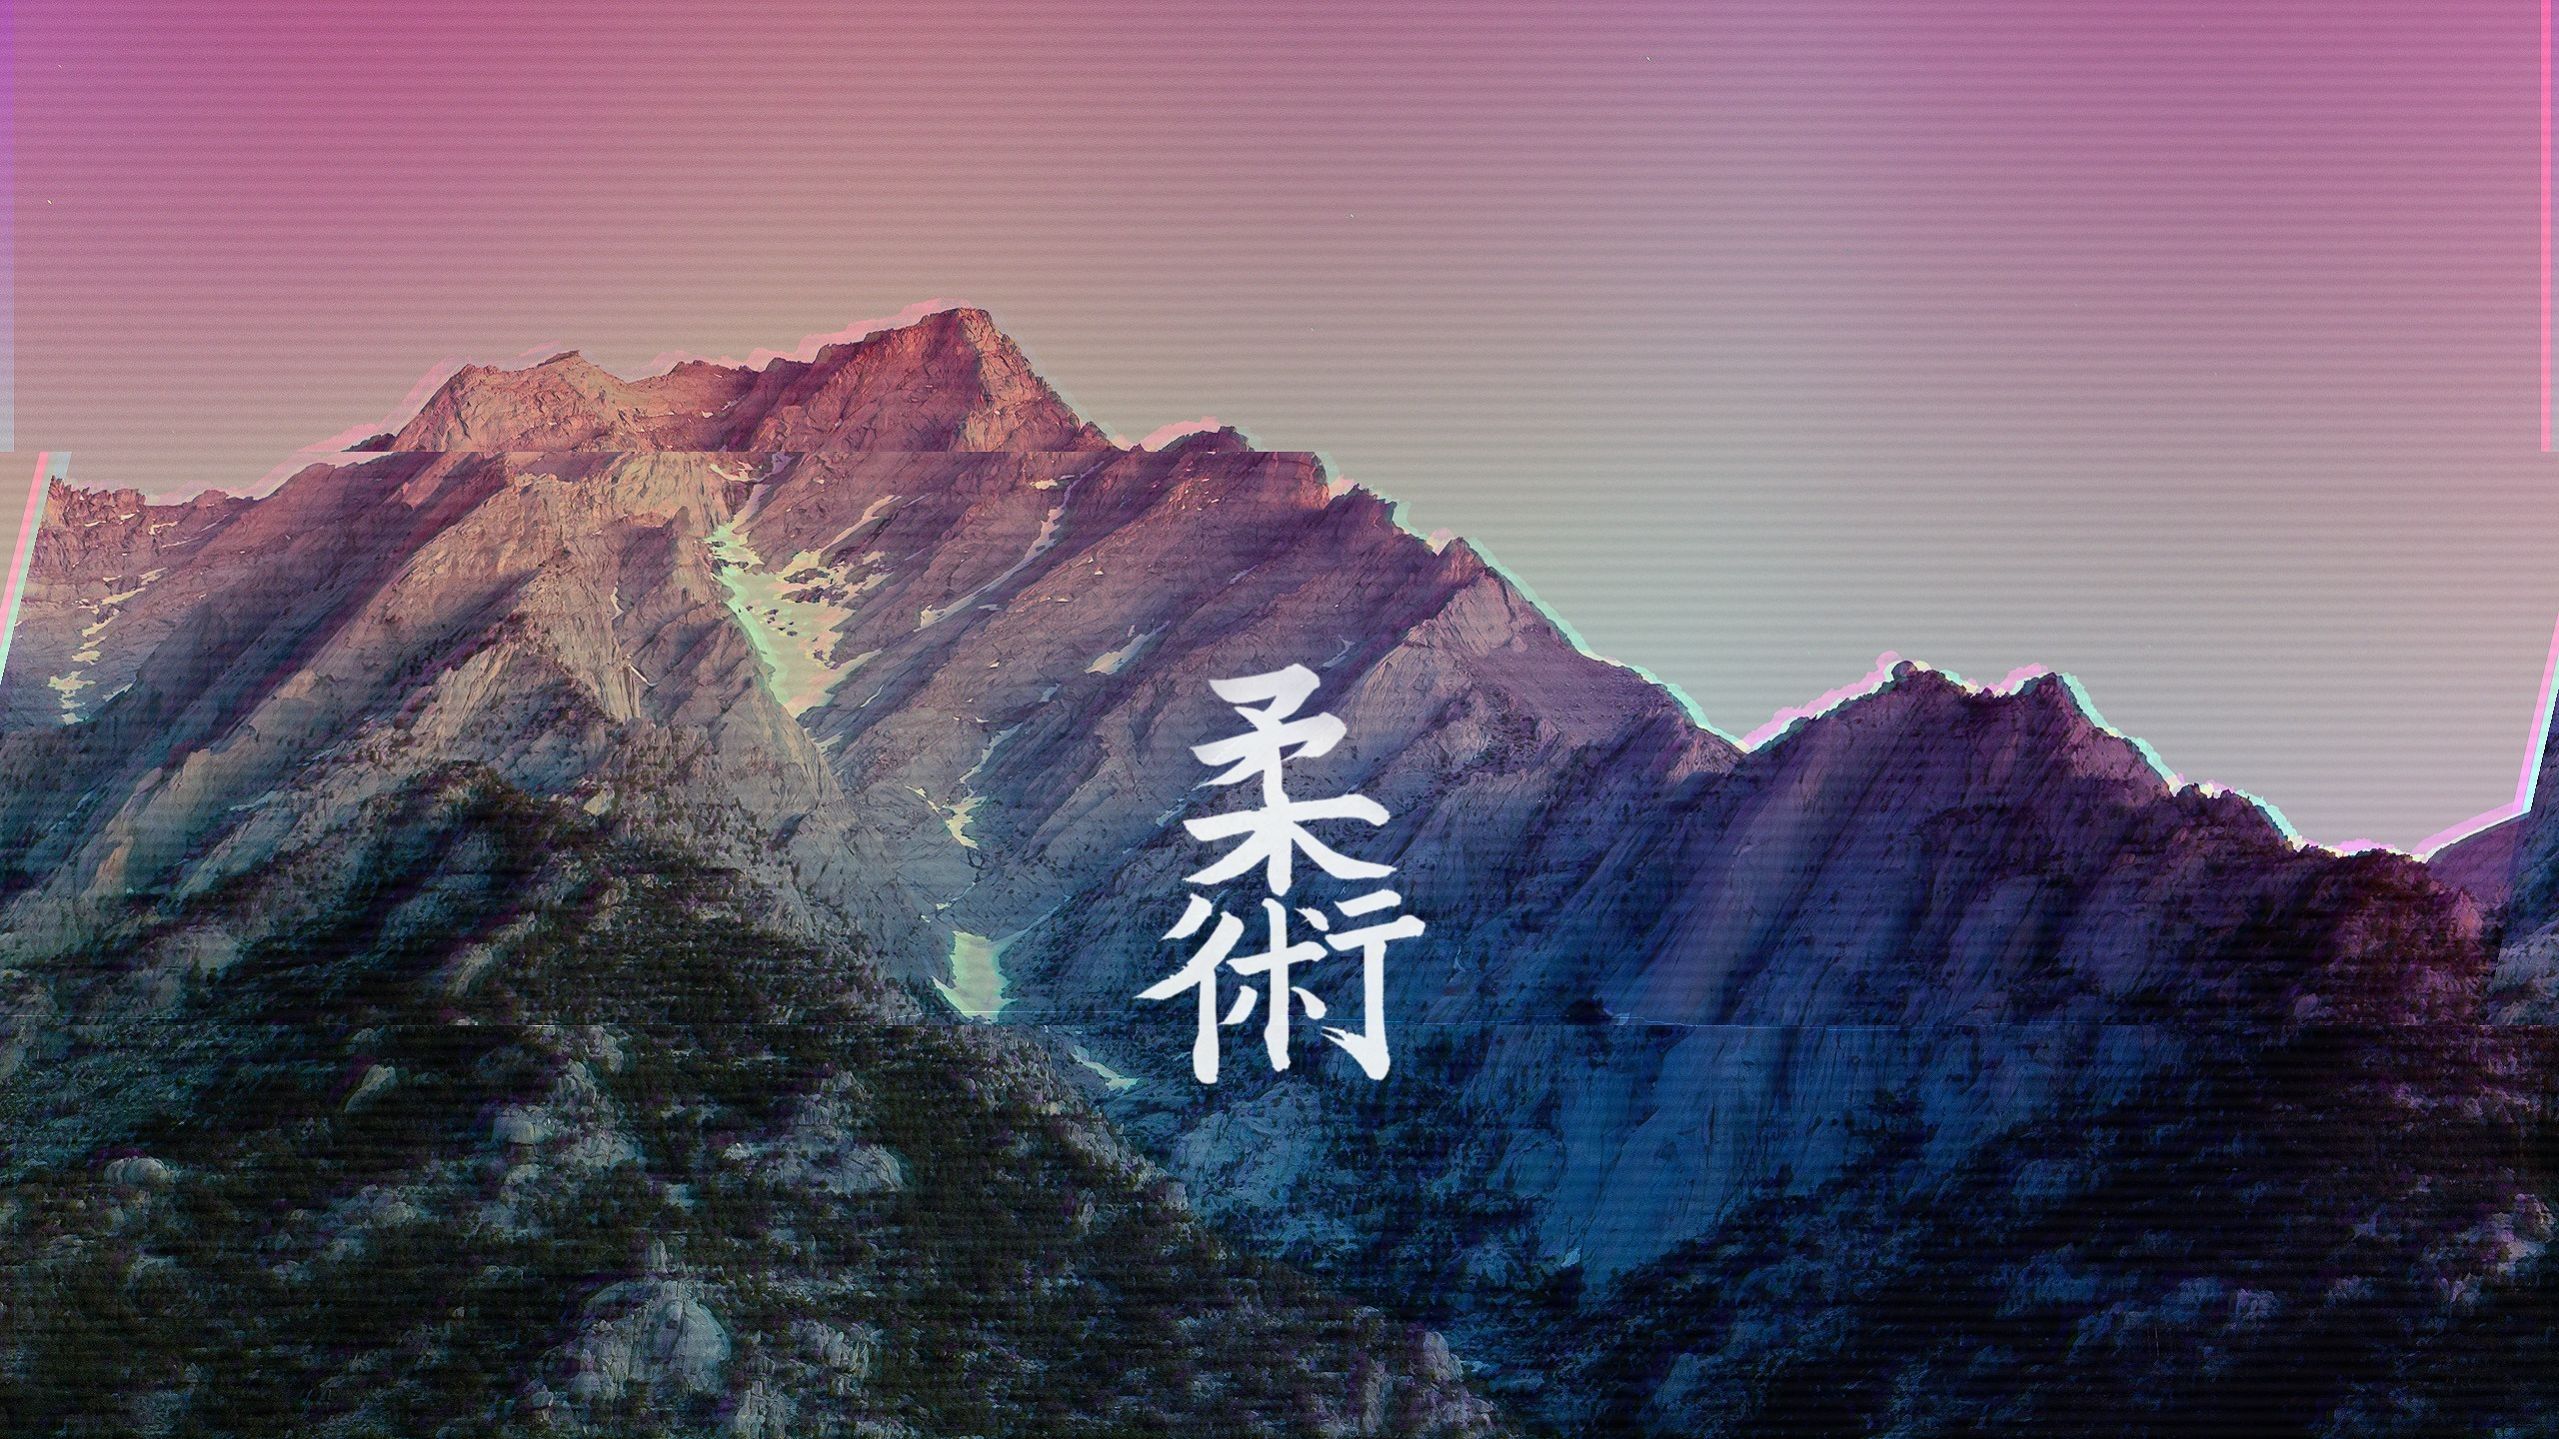 #Chinese characters, #vaporwave, #mountains, #kanji